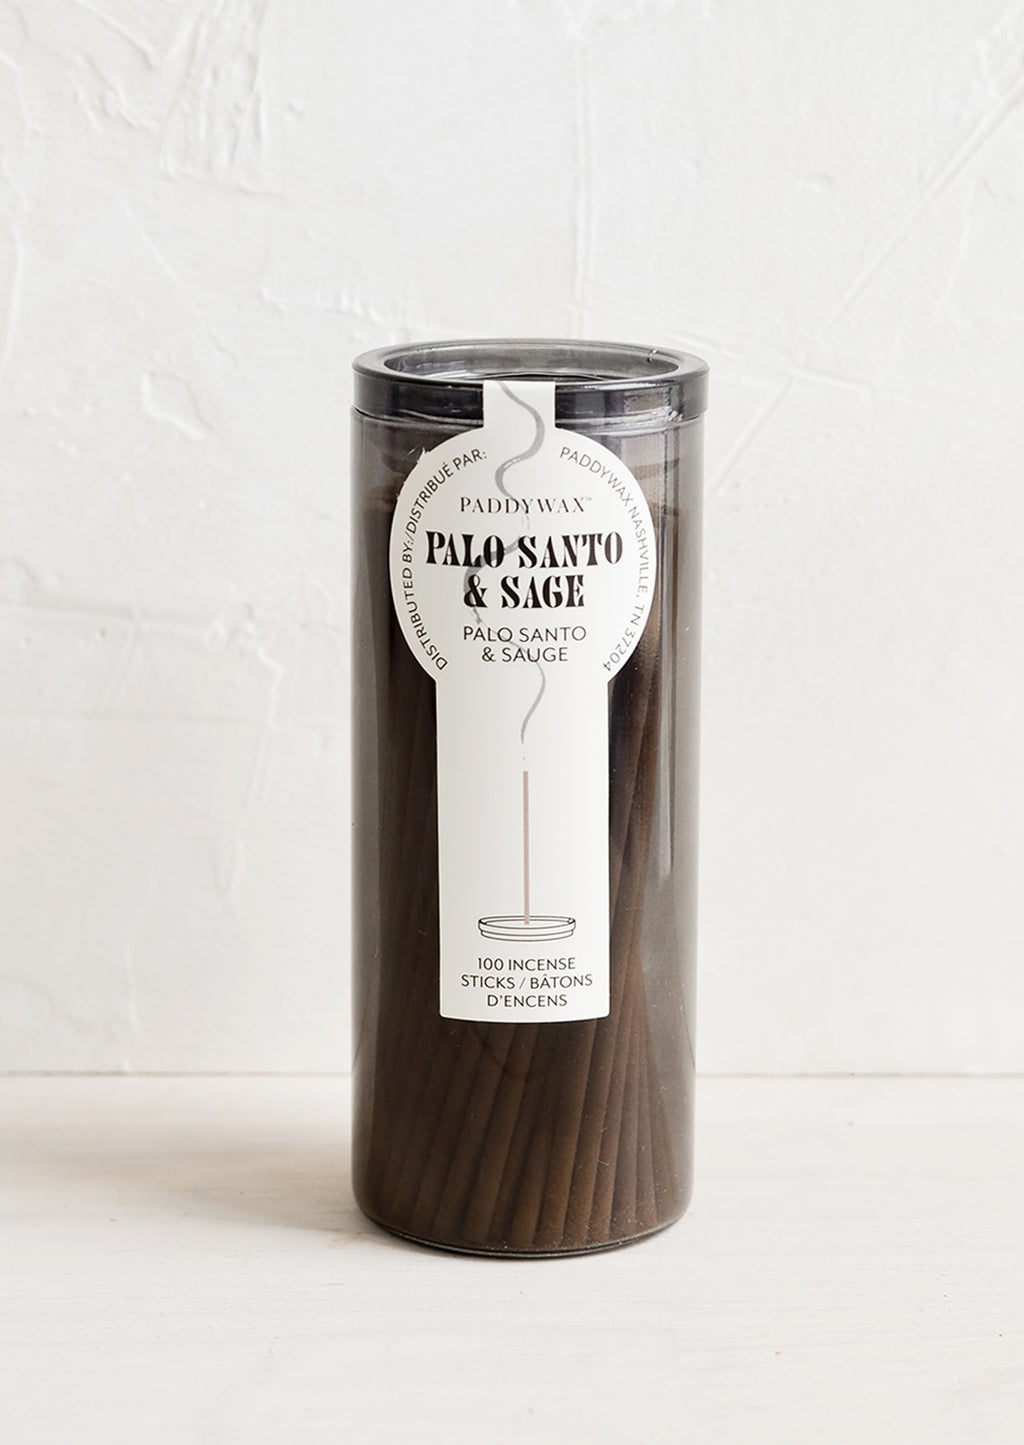 Palo Santo & Sage: A grey glass jar with incense sticks in palo santo scent.